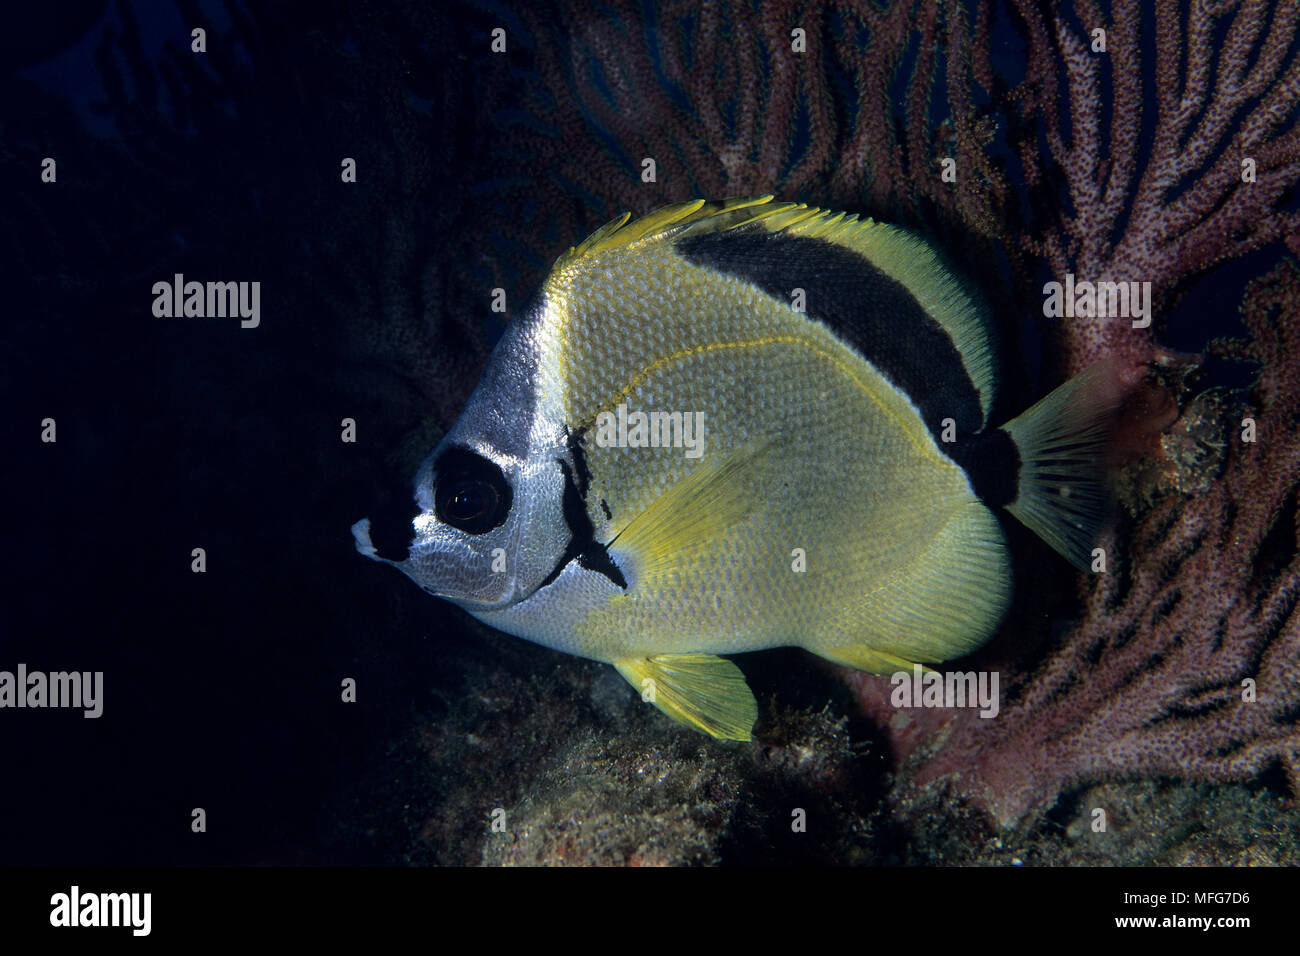 barberfish, Johnrandallia nigrirostris, Sea of Cortez, Baja California, Mexico, East Pacific Ocean  Date: 24.06.08  Ref: ZB777 115632 0033  COMPULSORY Stock Photo